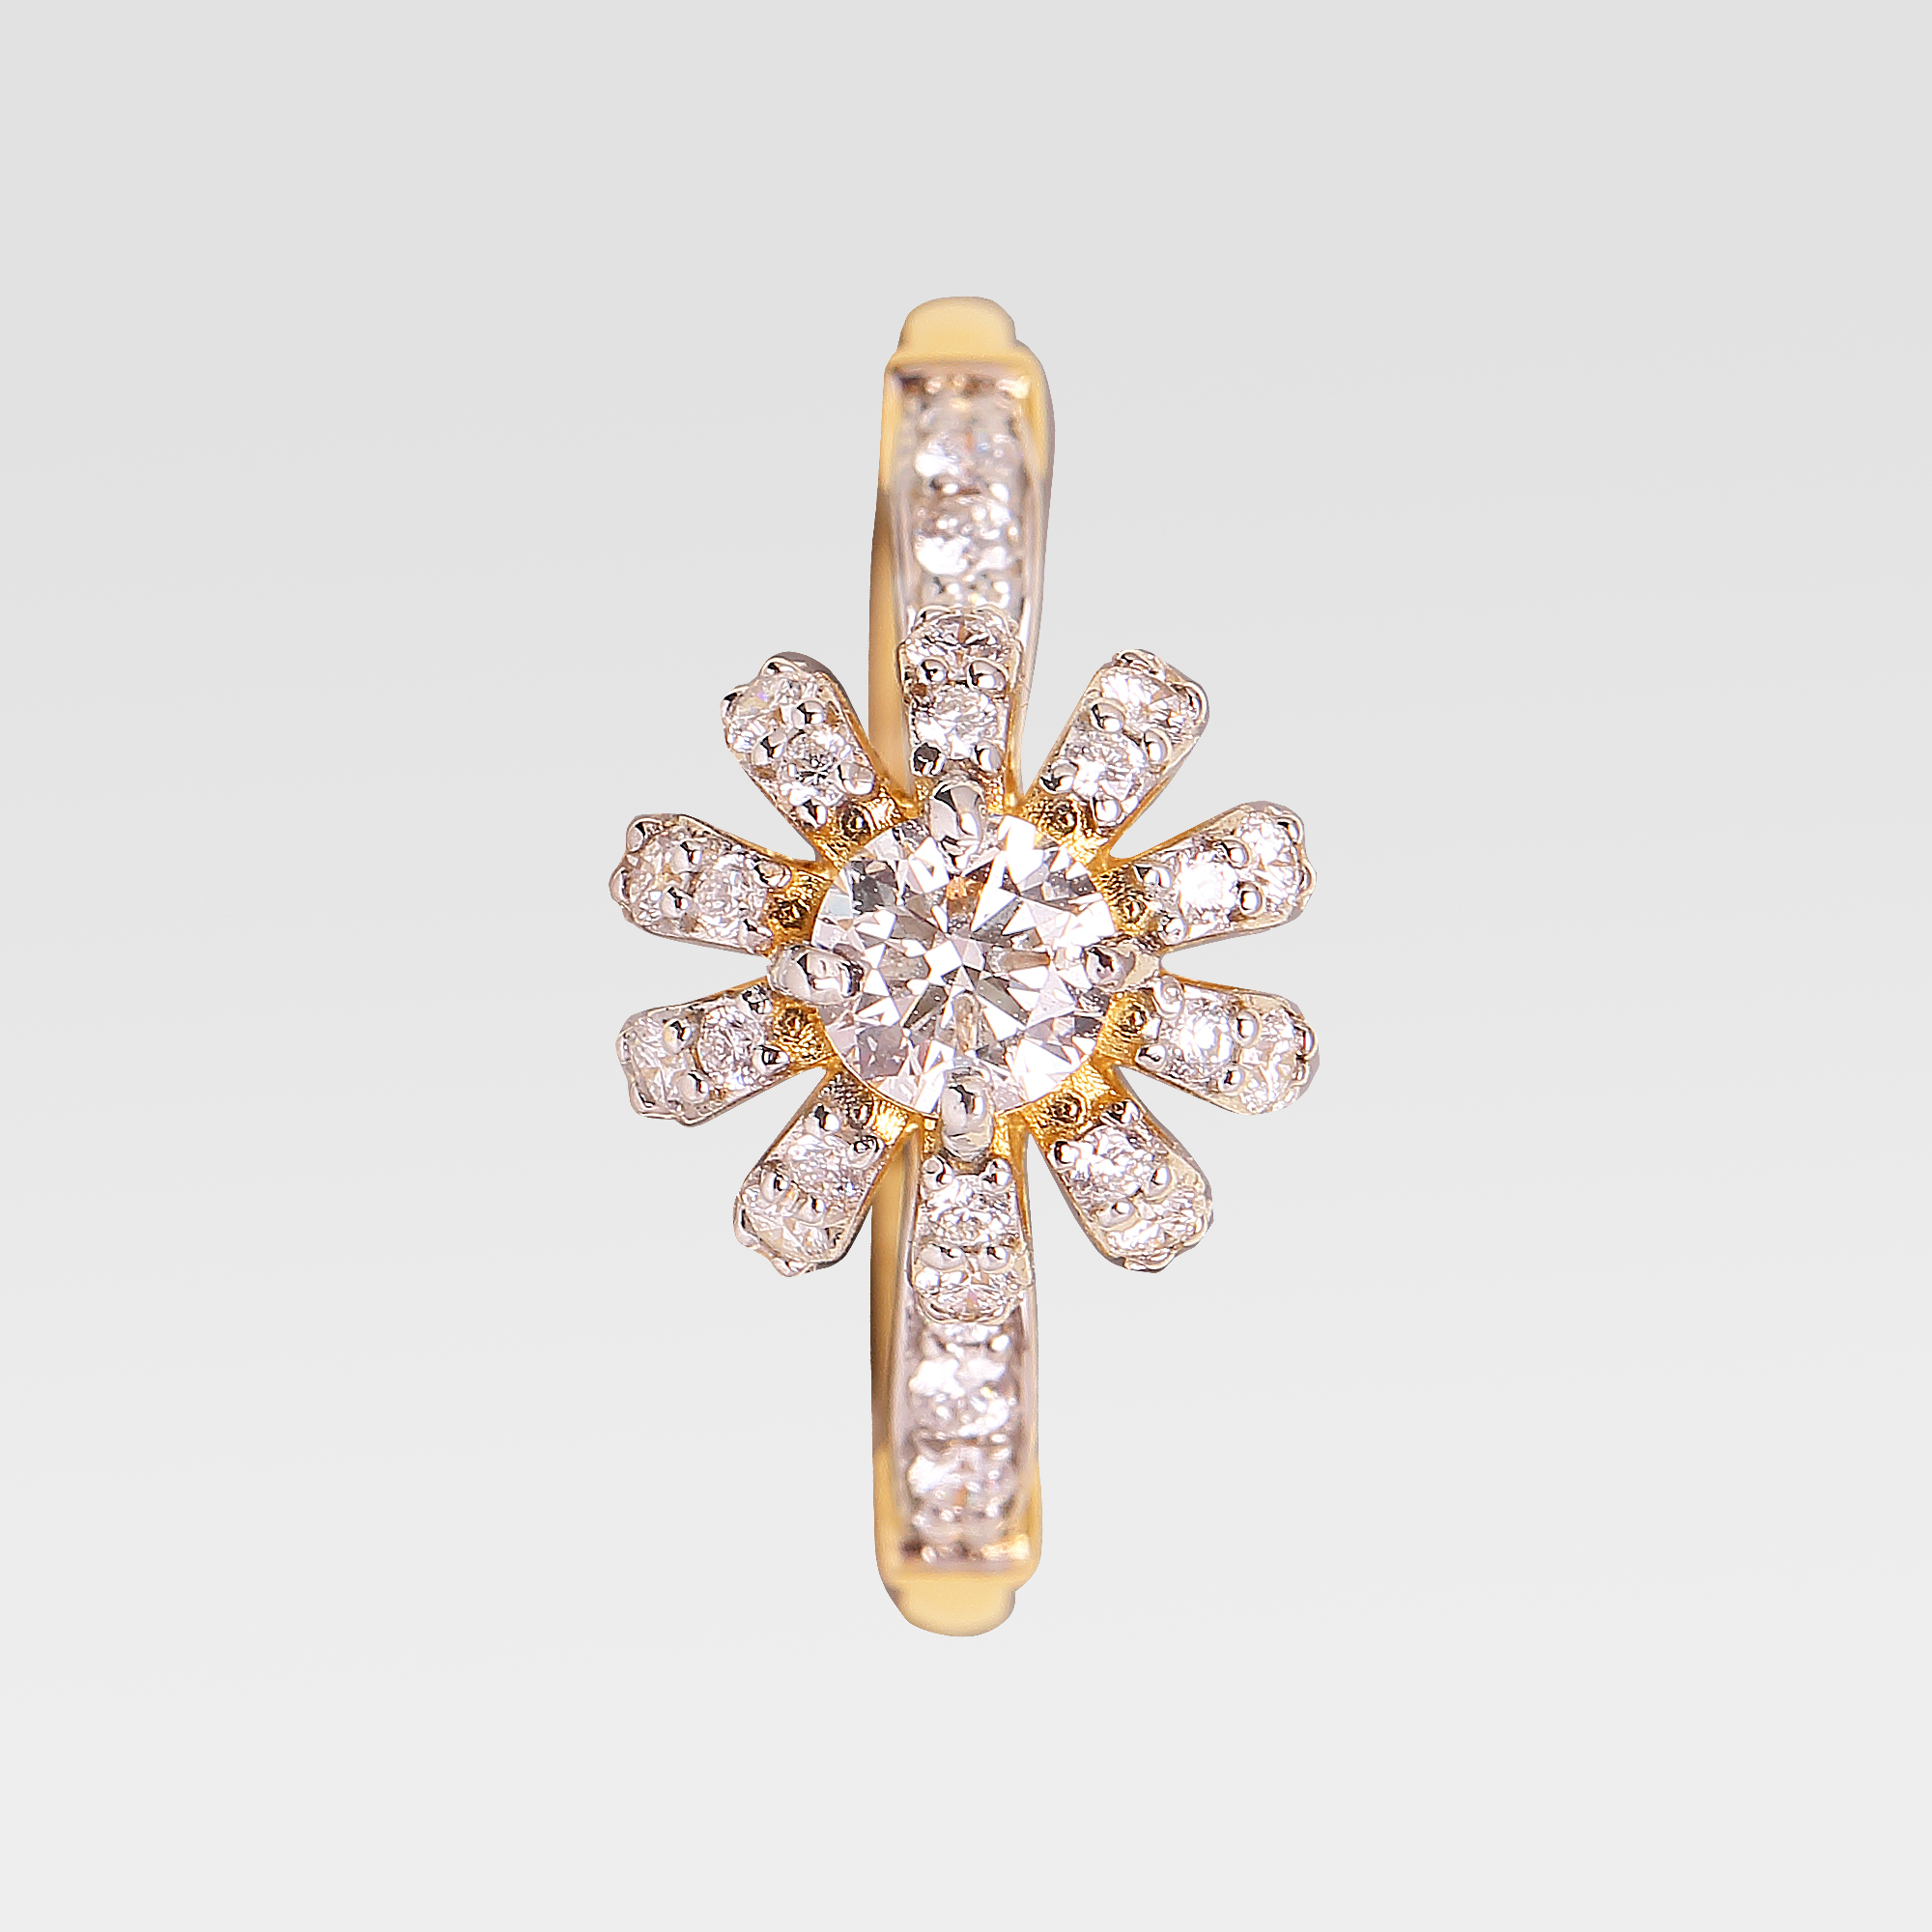 Captivating diamond ring